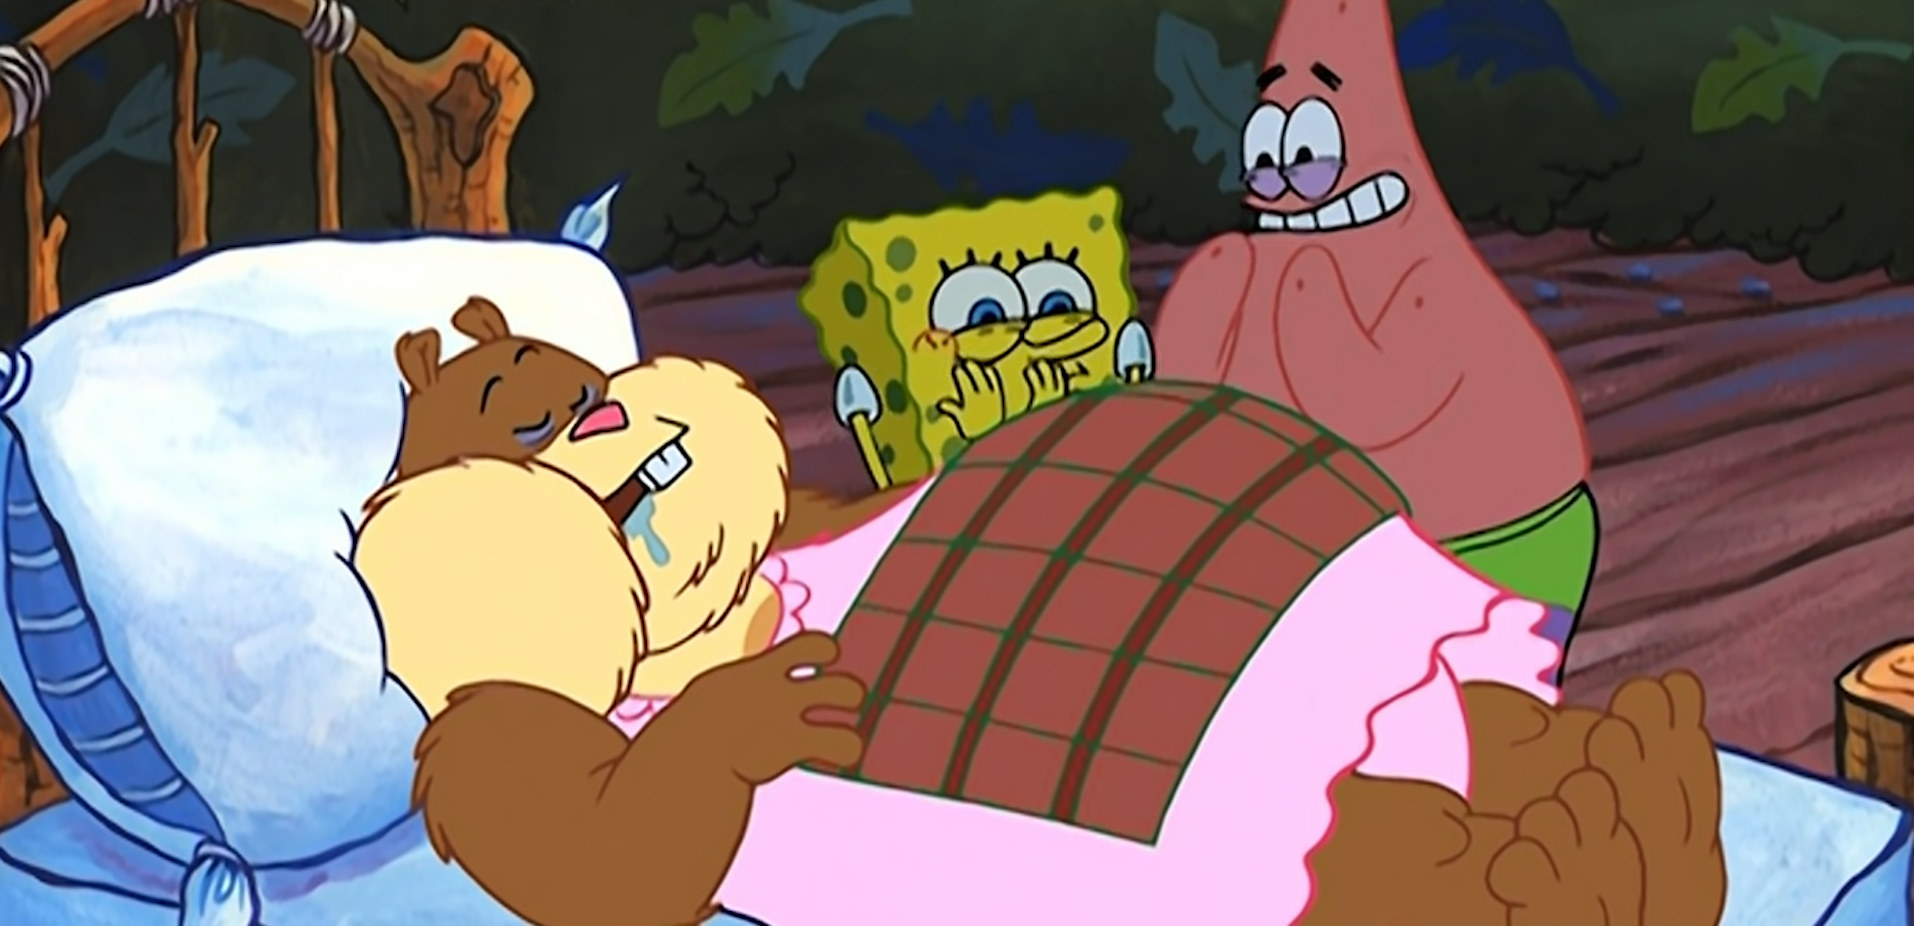 Spongebob, Patrick, and a hibernating Sandy